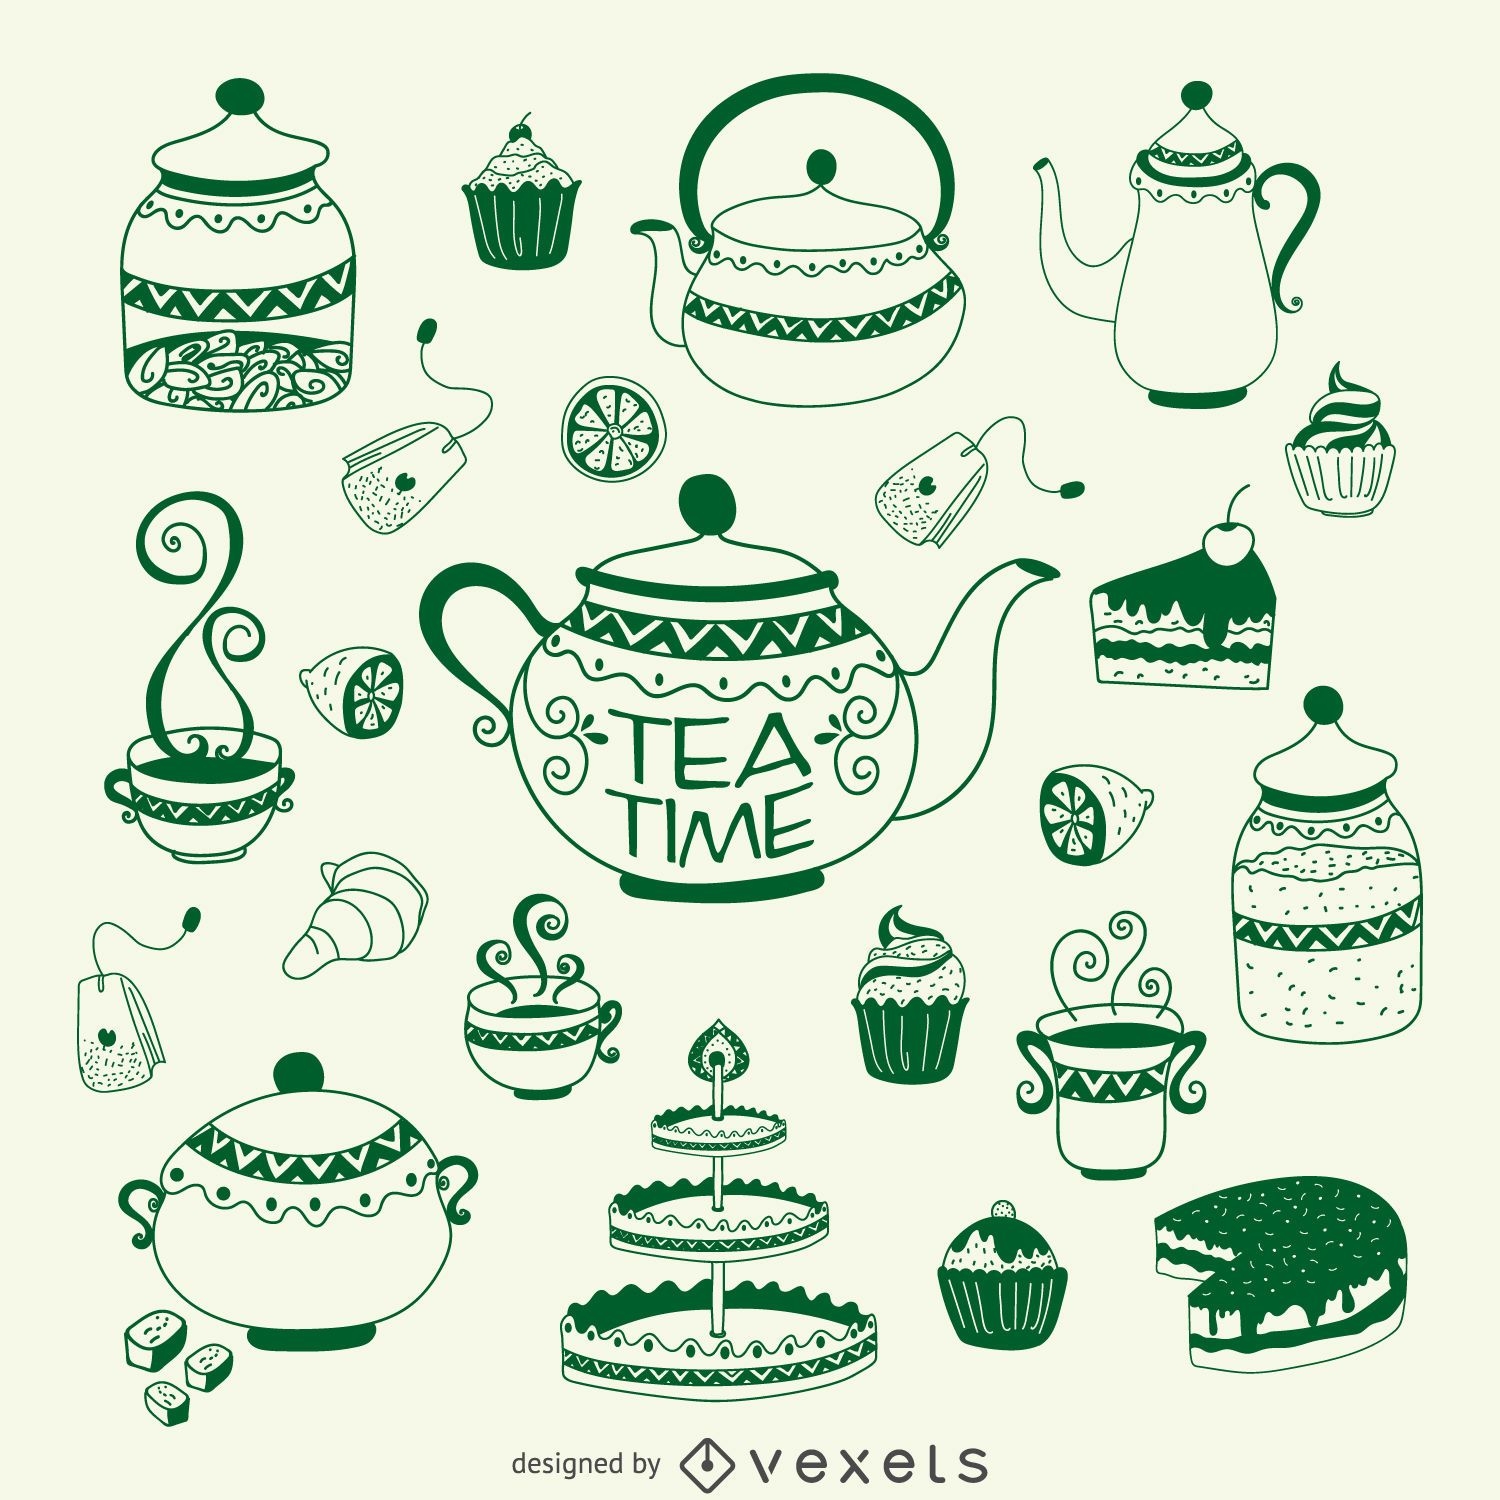 Tea time illustration set